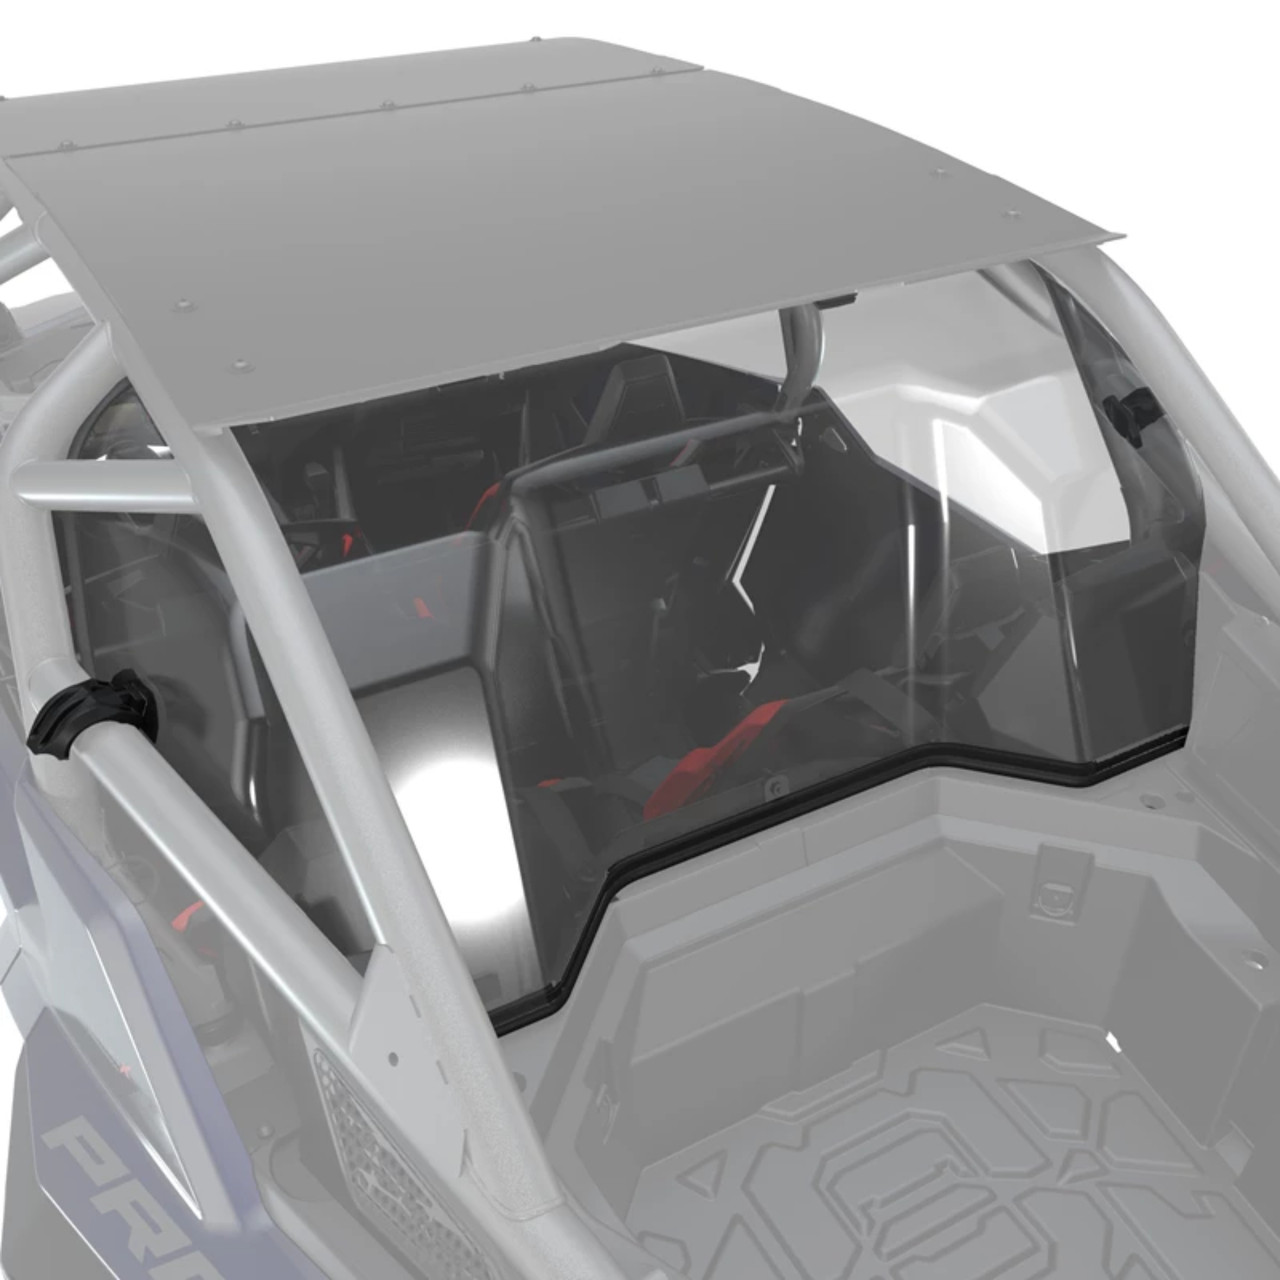 Polaris New OEM Lock & Ride Polycarbonate Rear Panel 4 Seat for RZR, 2884594